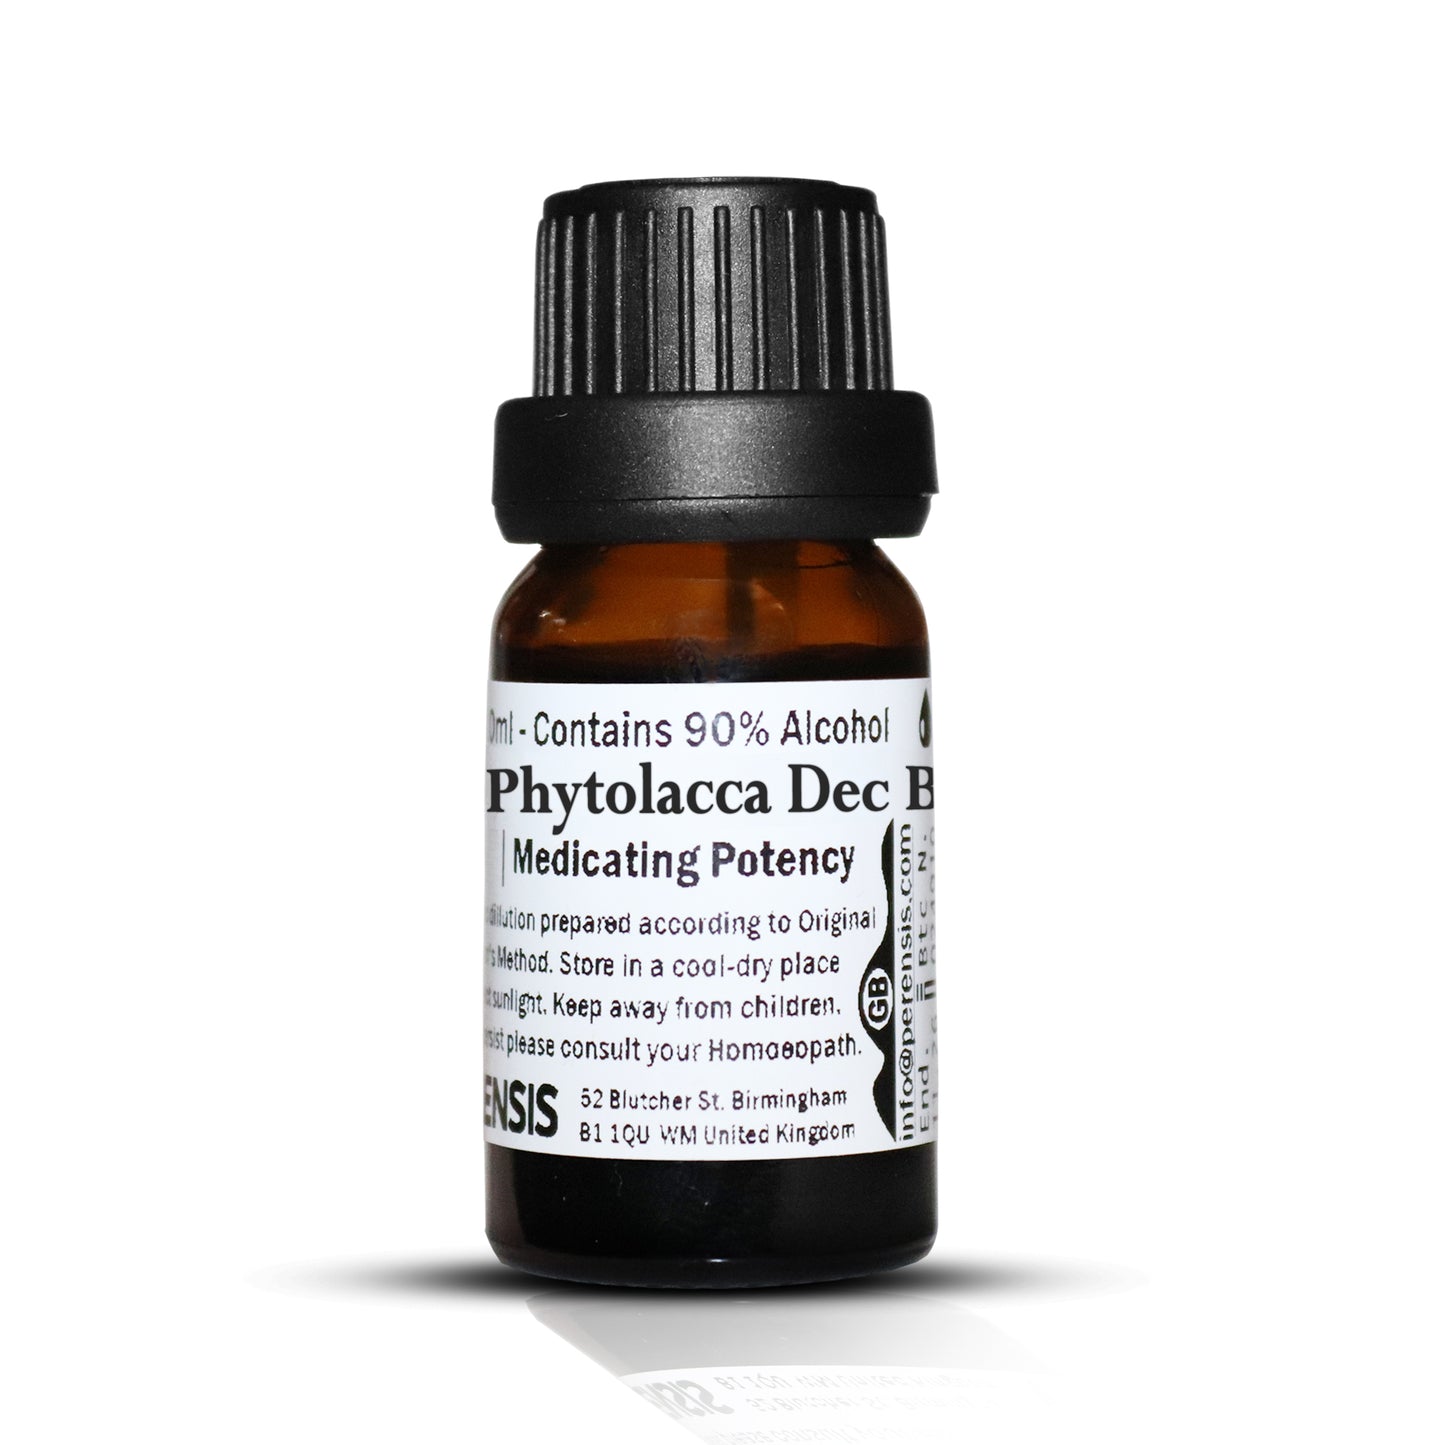 Phytolacca Dec.